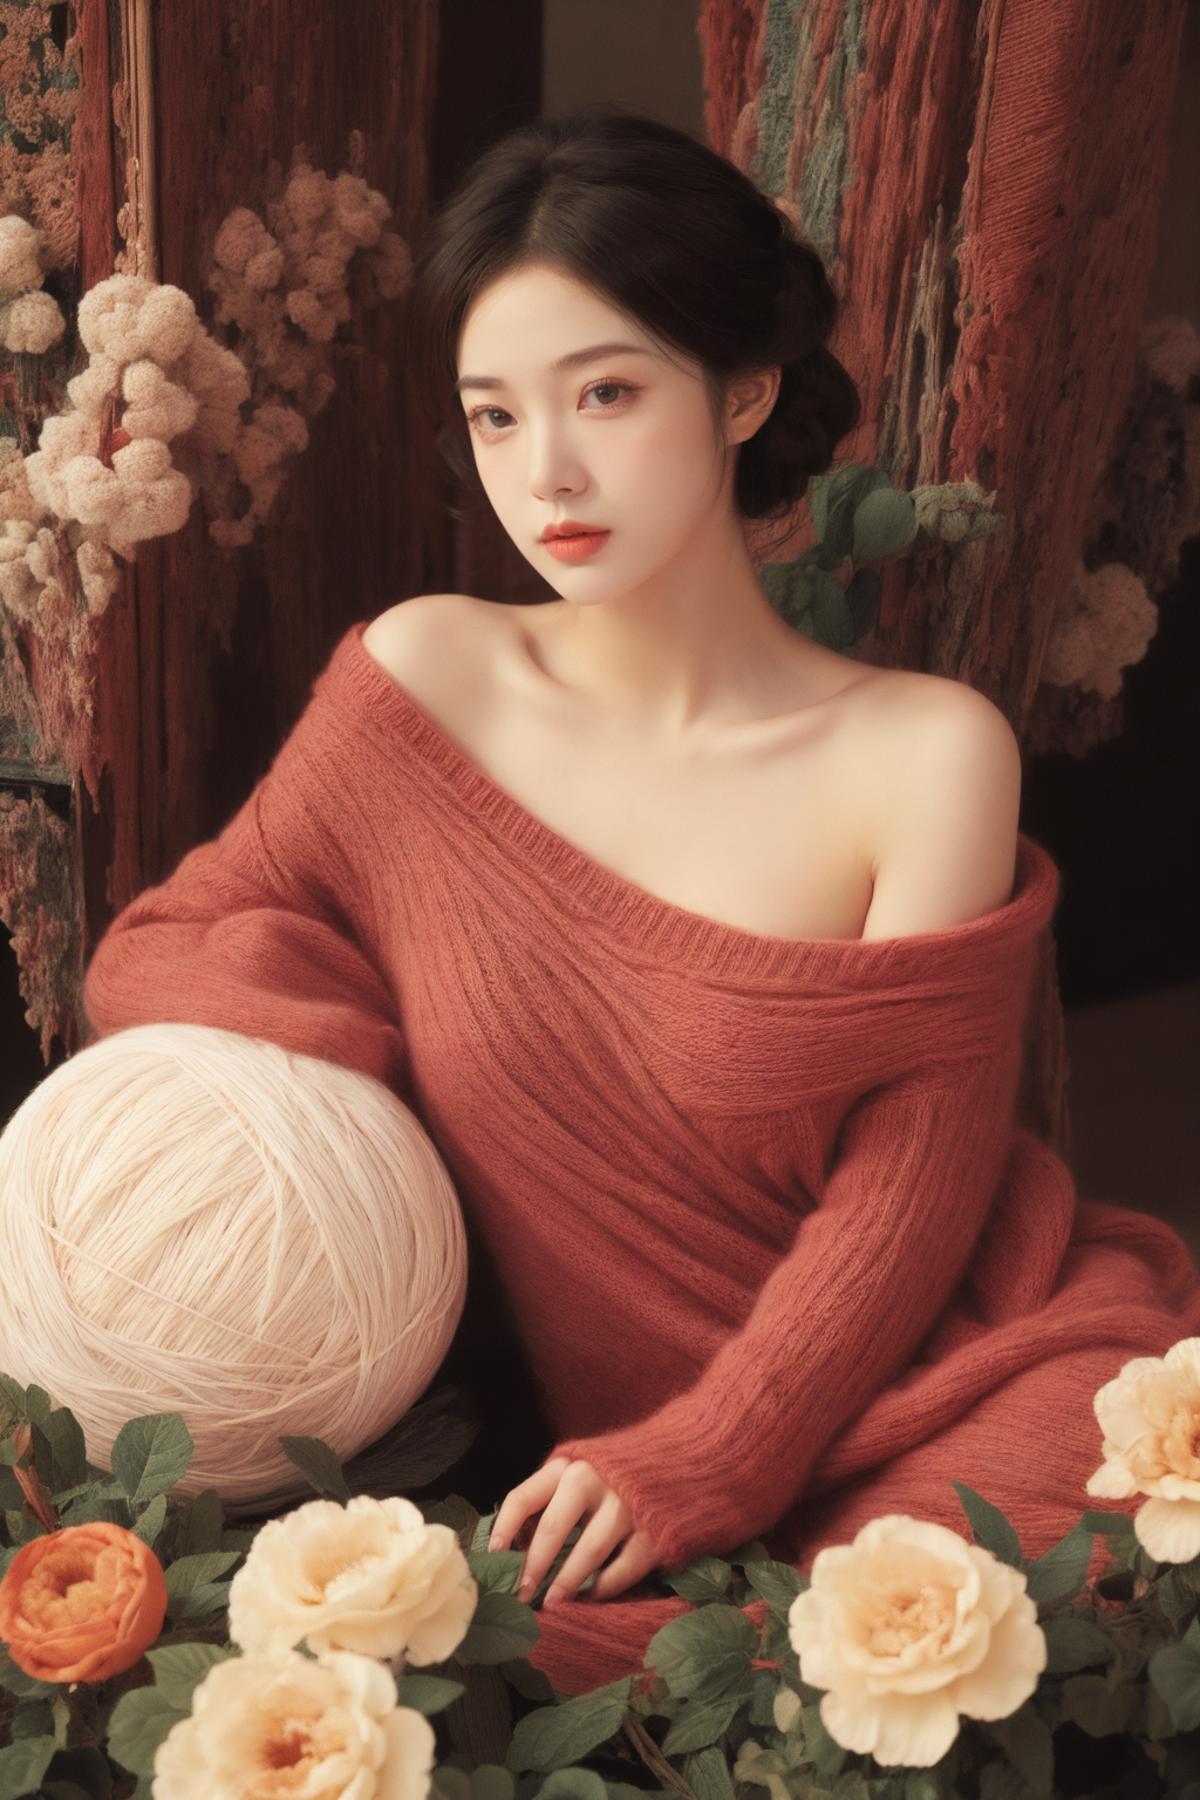 yarn ball world image by MengX